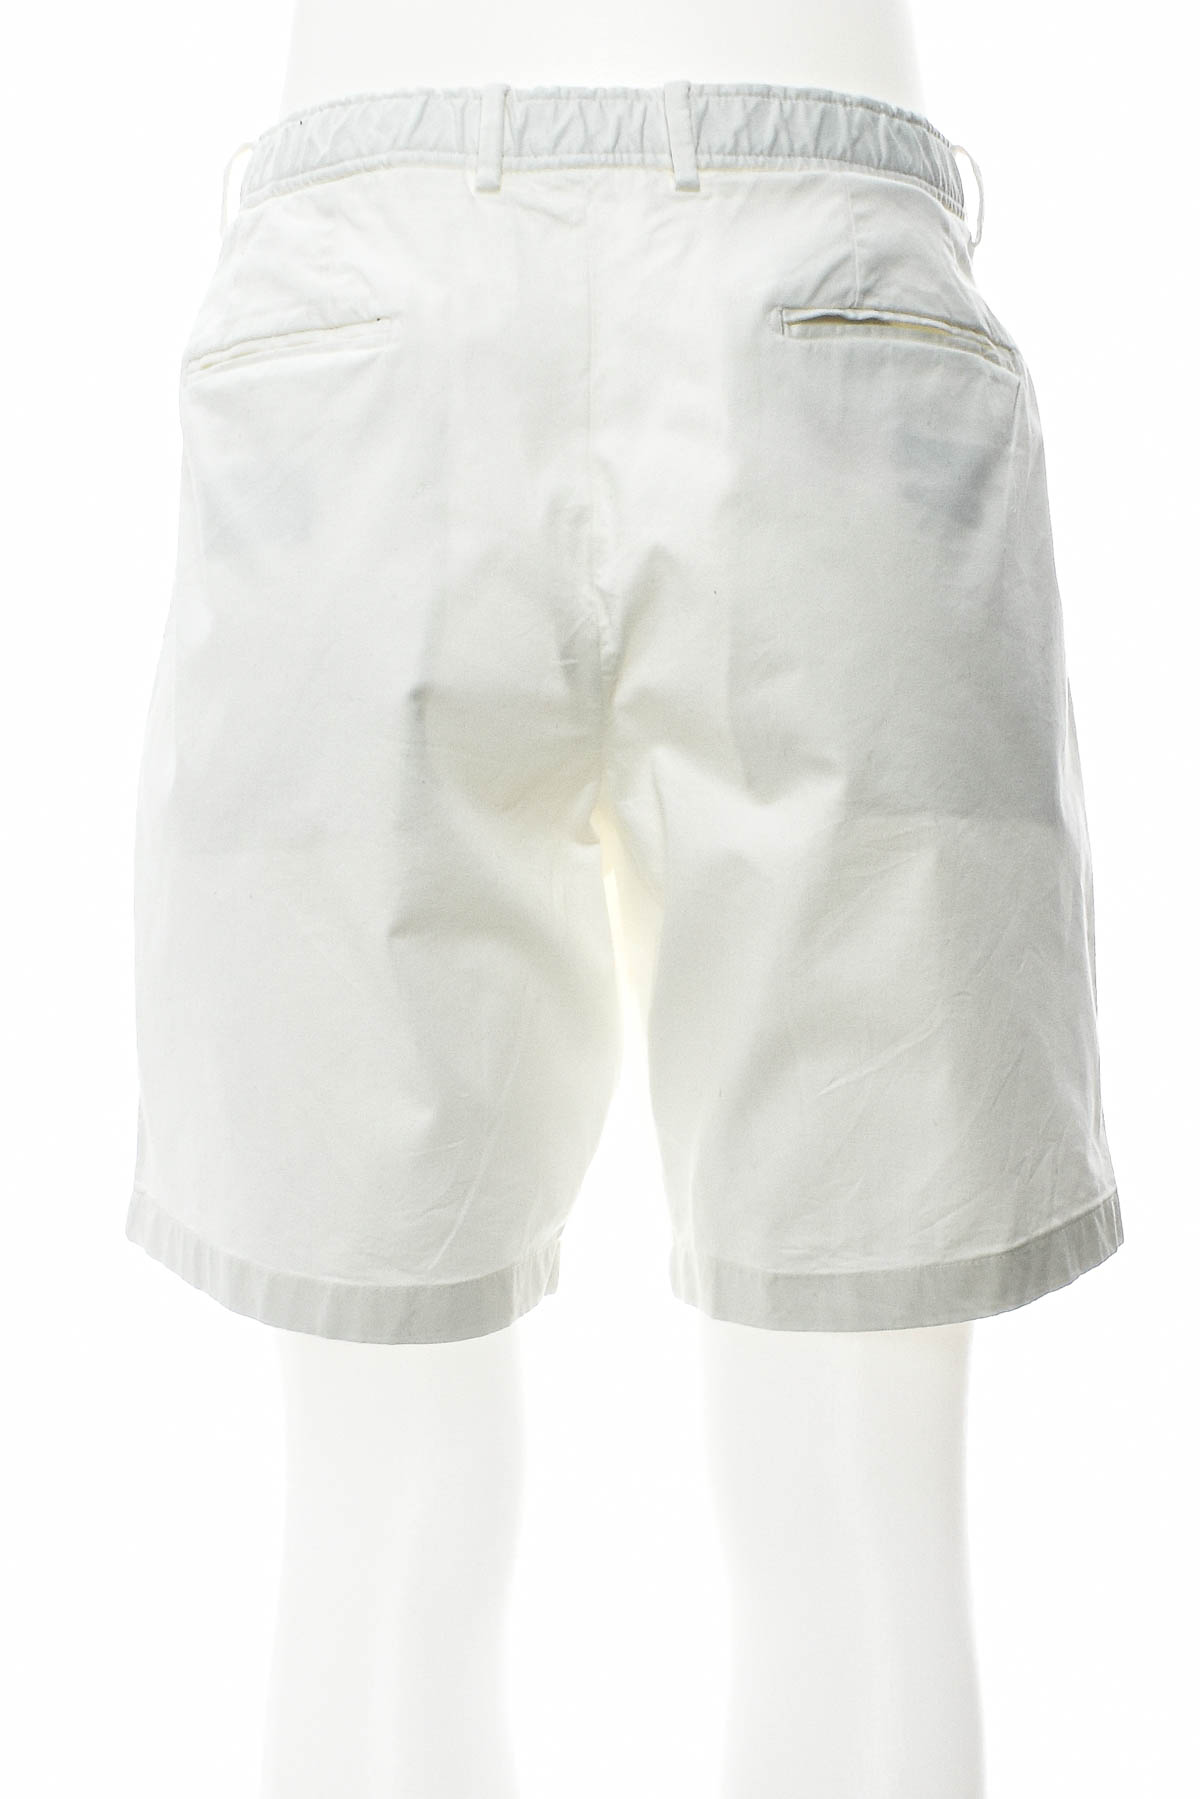 Men's shorts - TESSUTI DI SONDRIO - 1